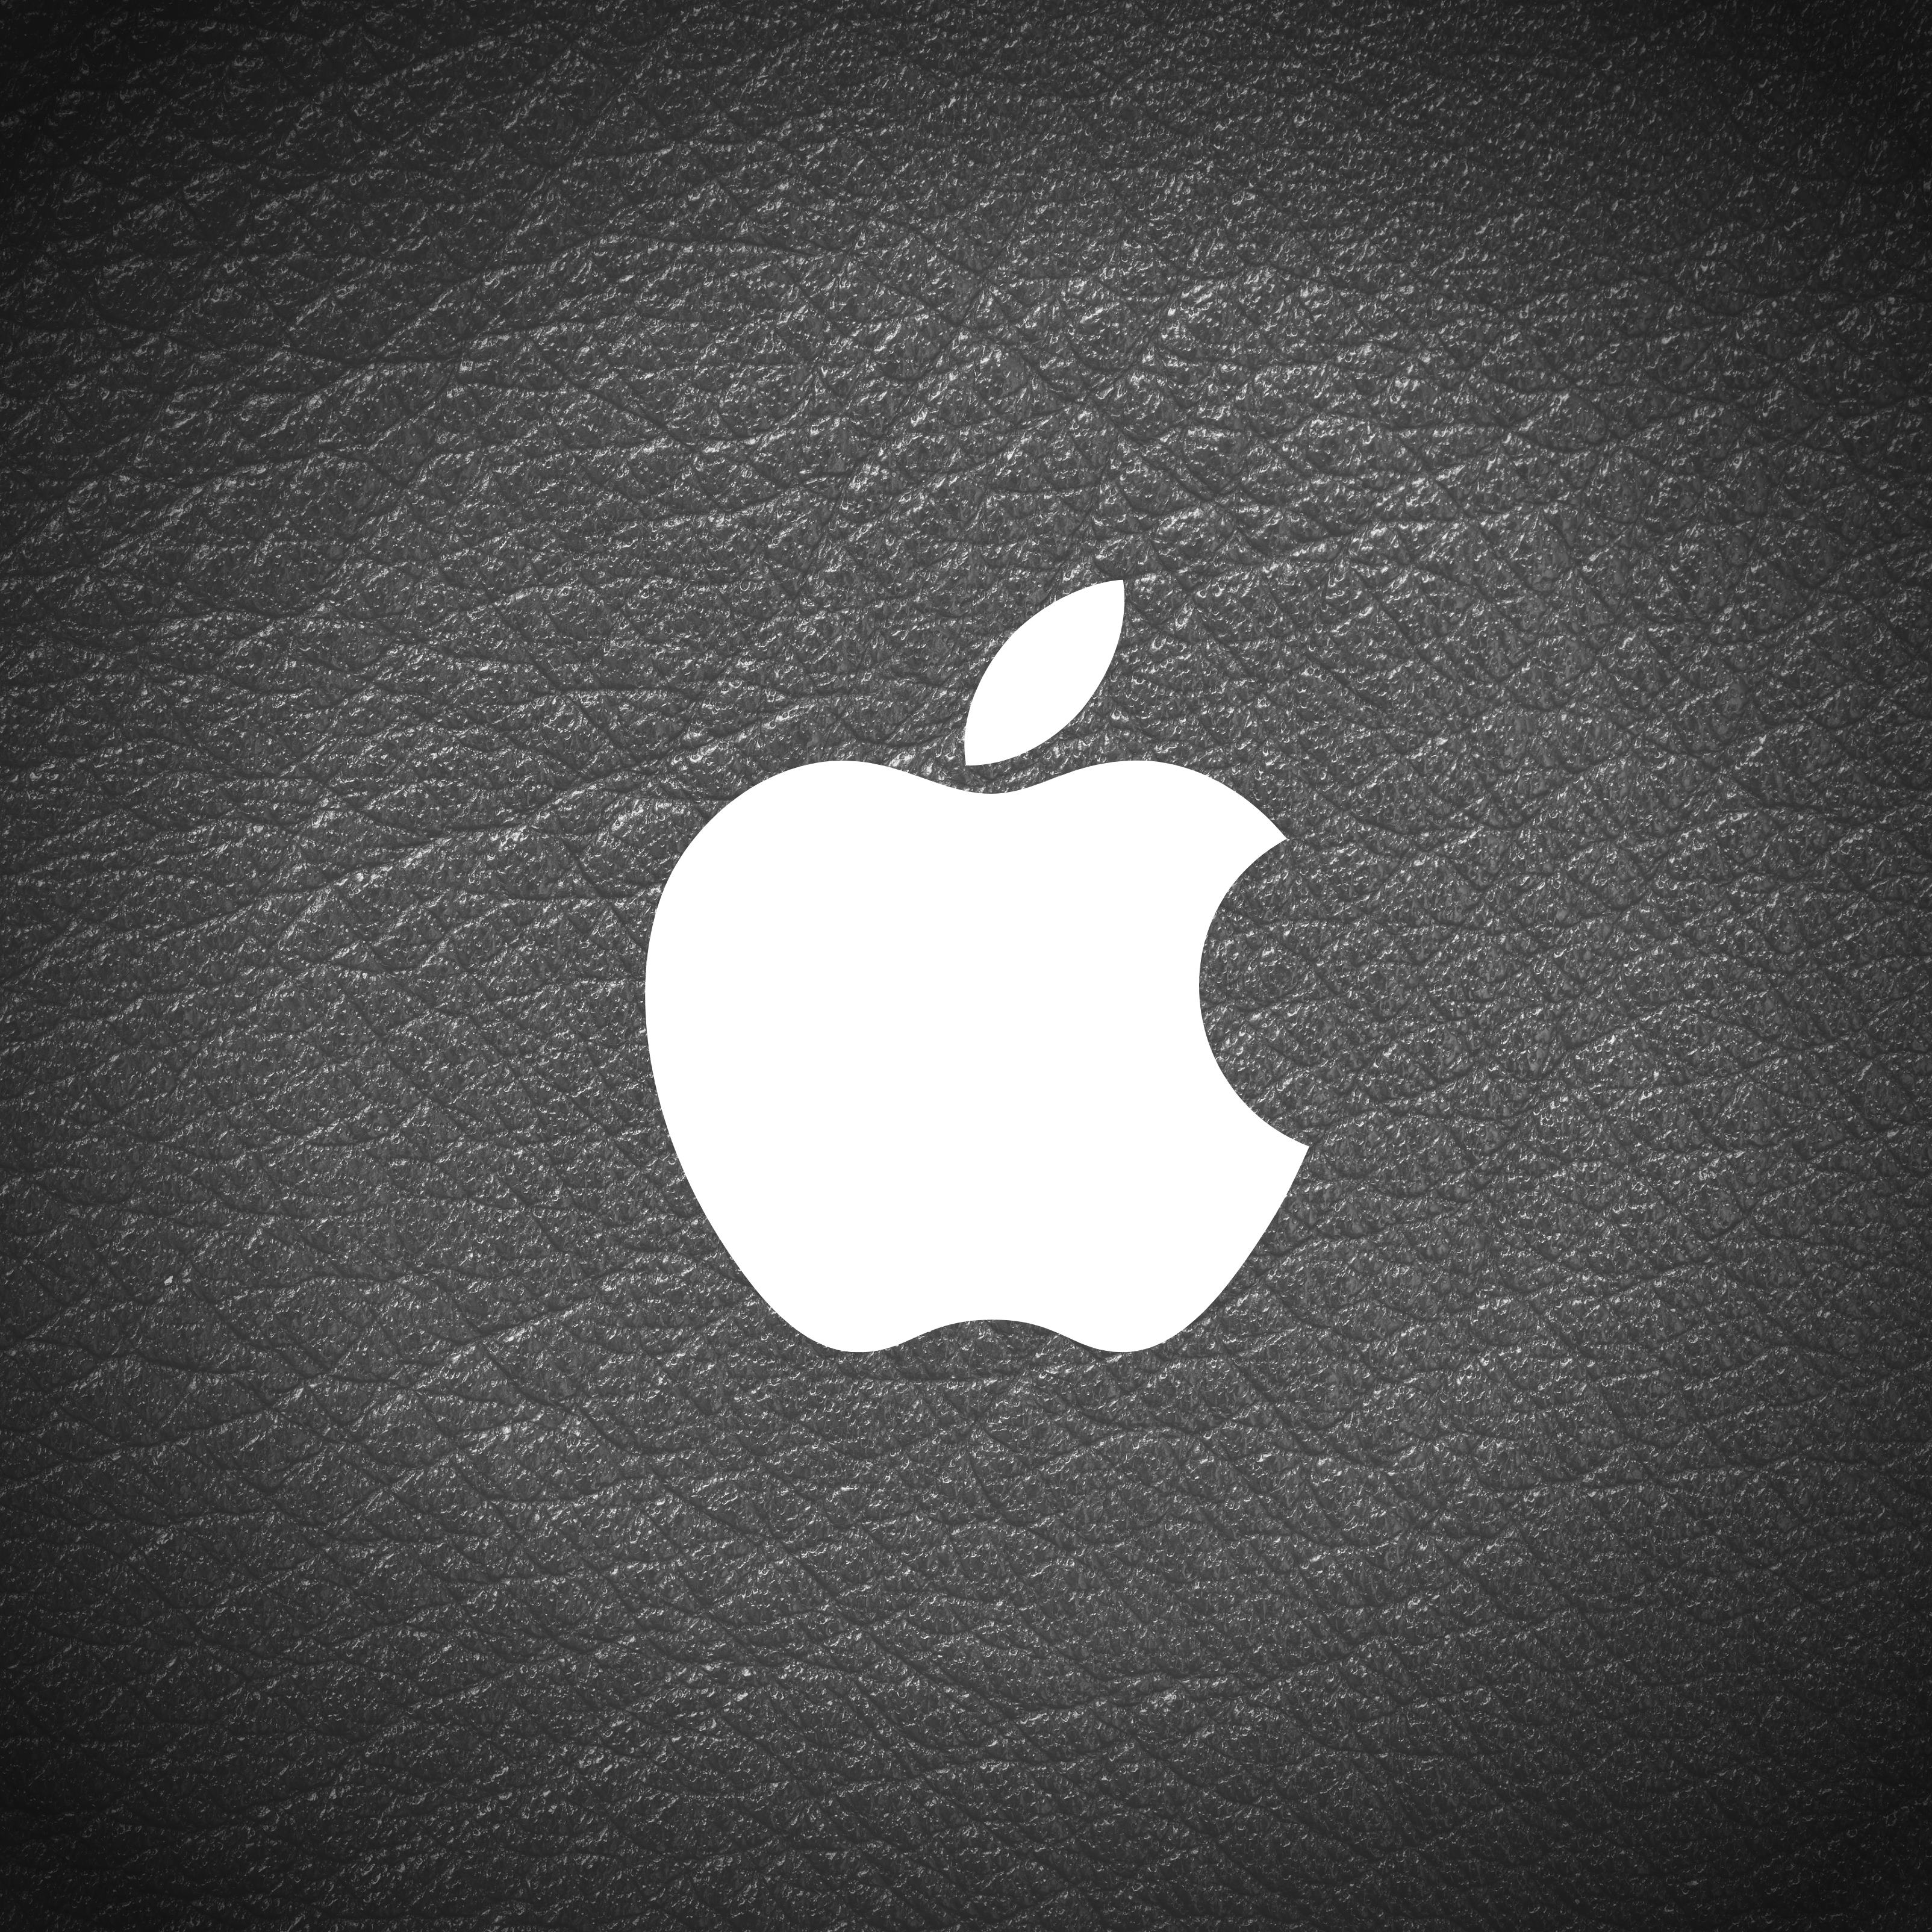 HD iPad Wallpapers 4K Apple Logo Leather Black and White iPad Wallpaper 3208X3208 pixels